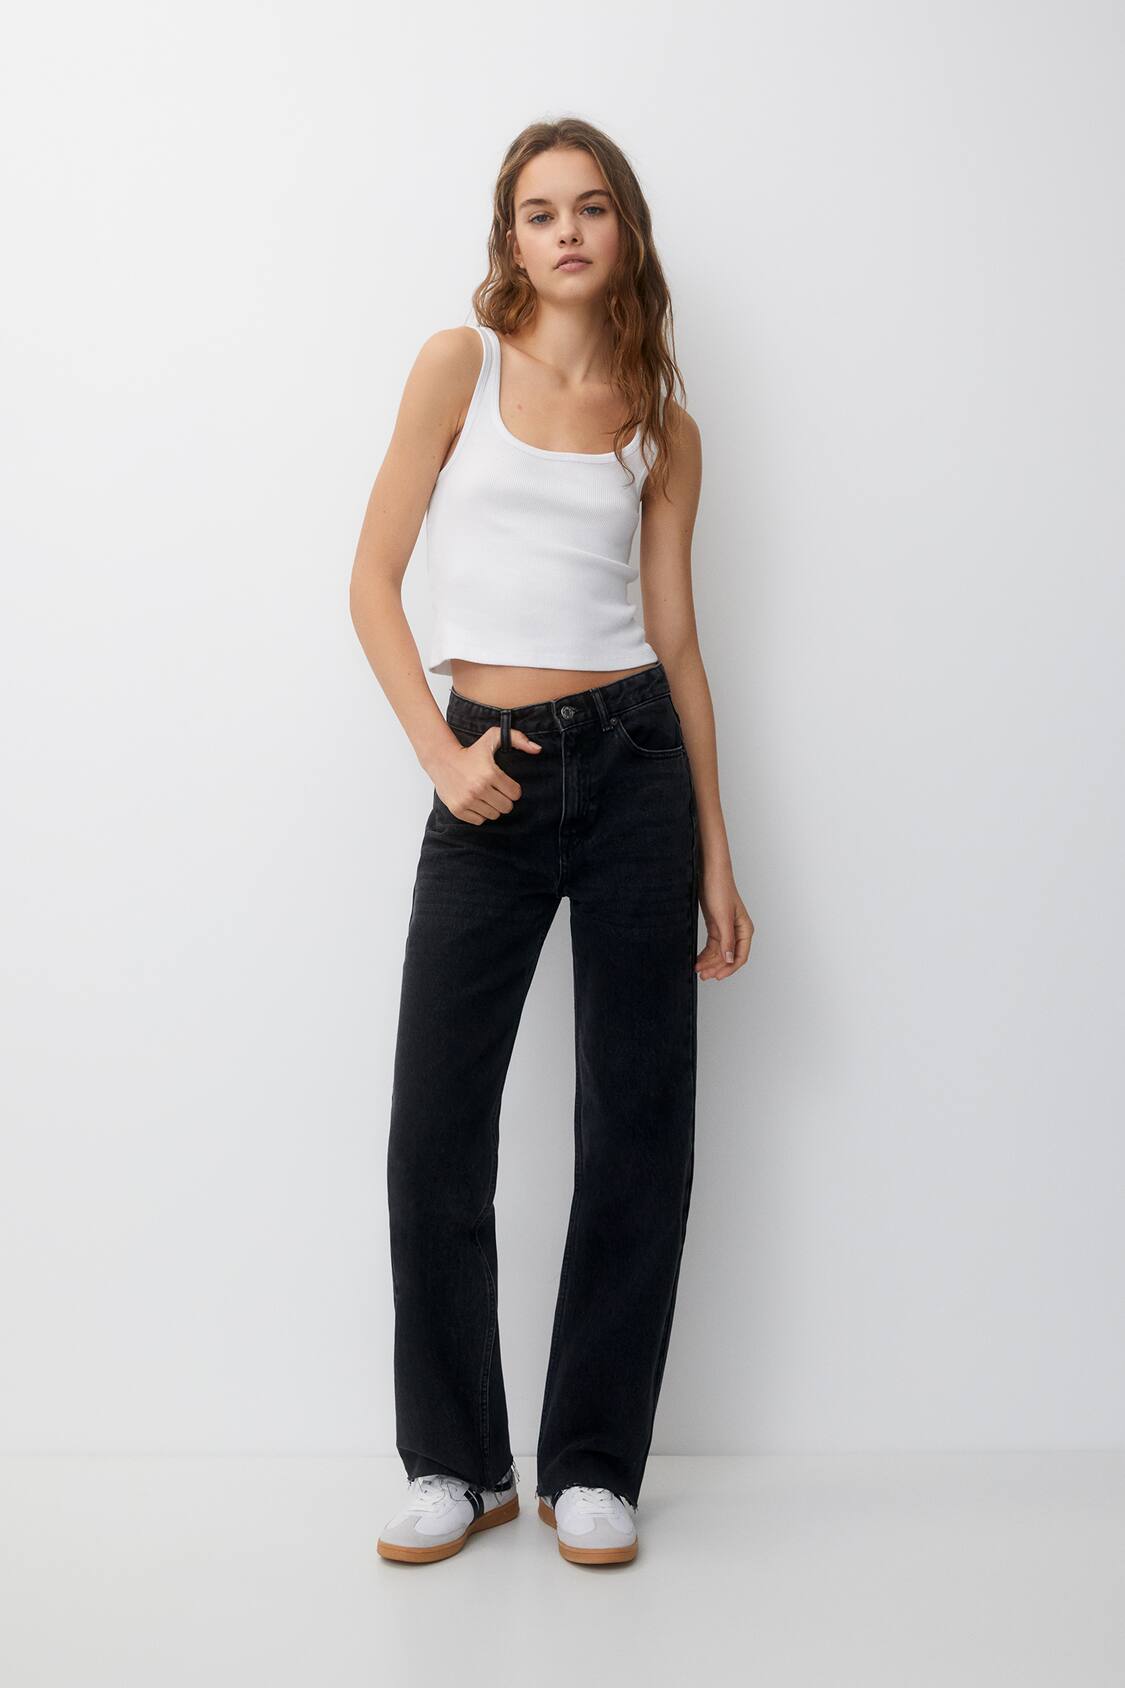 Straight - Jeans - Clothing - Woman - PULL&BEAR TAIWAN, CHINA / 中国台湾